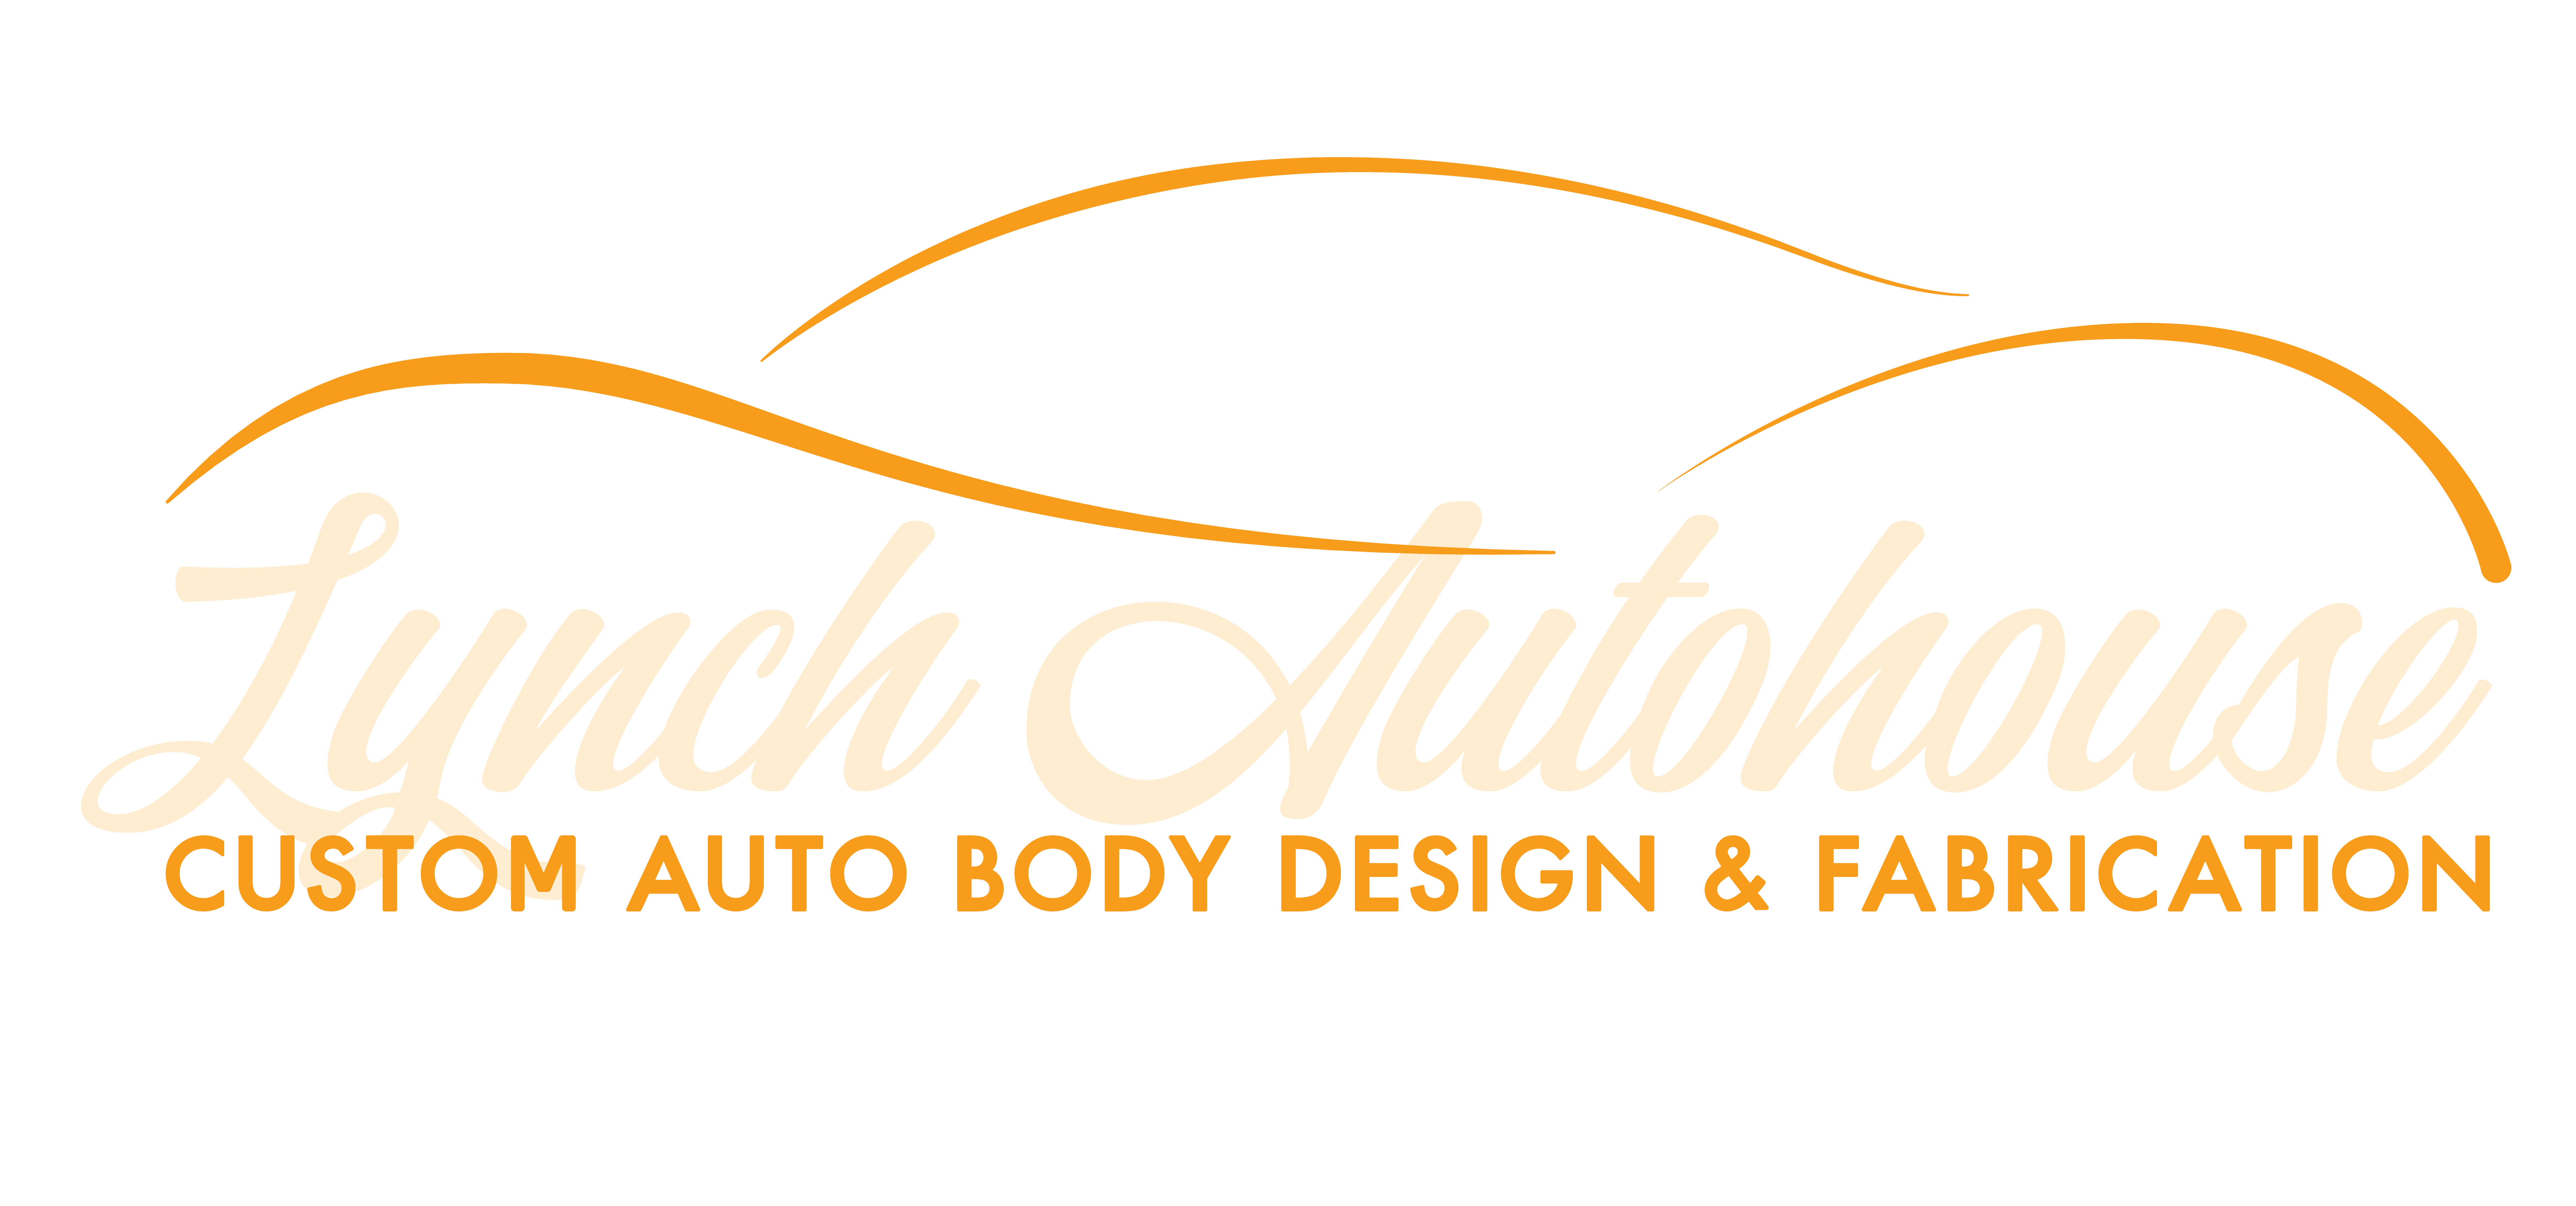 Lunch Autohous. custom auto body design & fabrication Logo with orange silhouette of a car